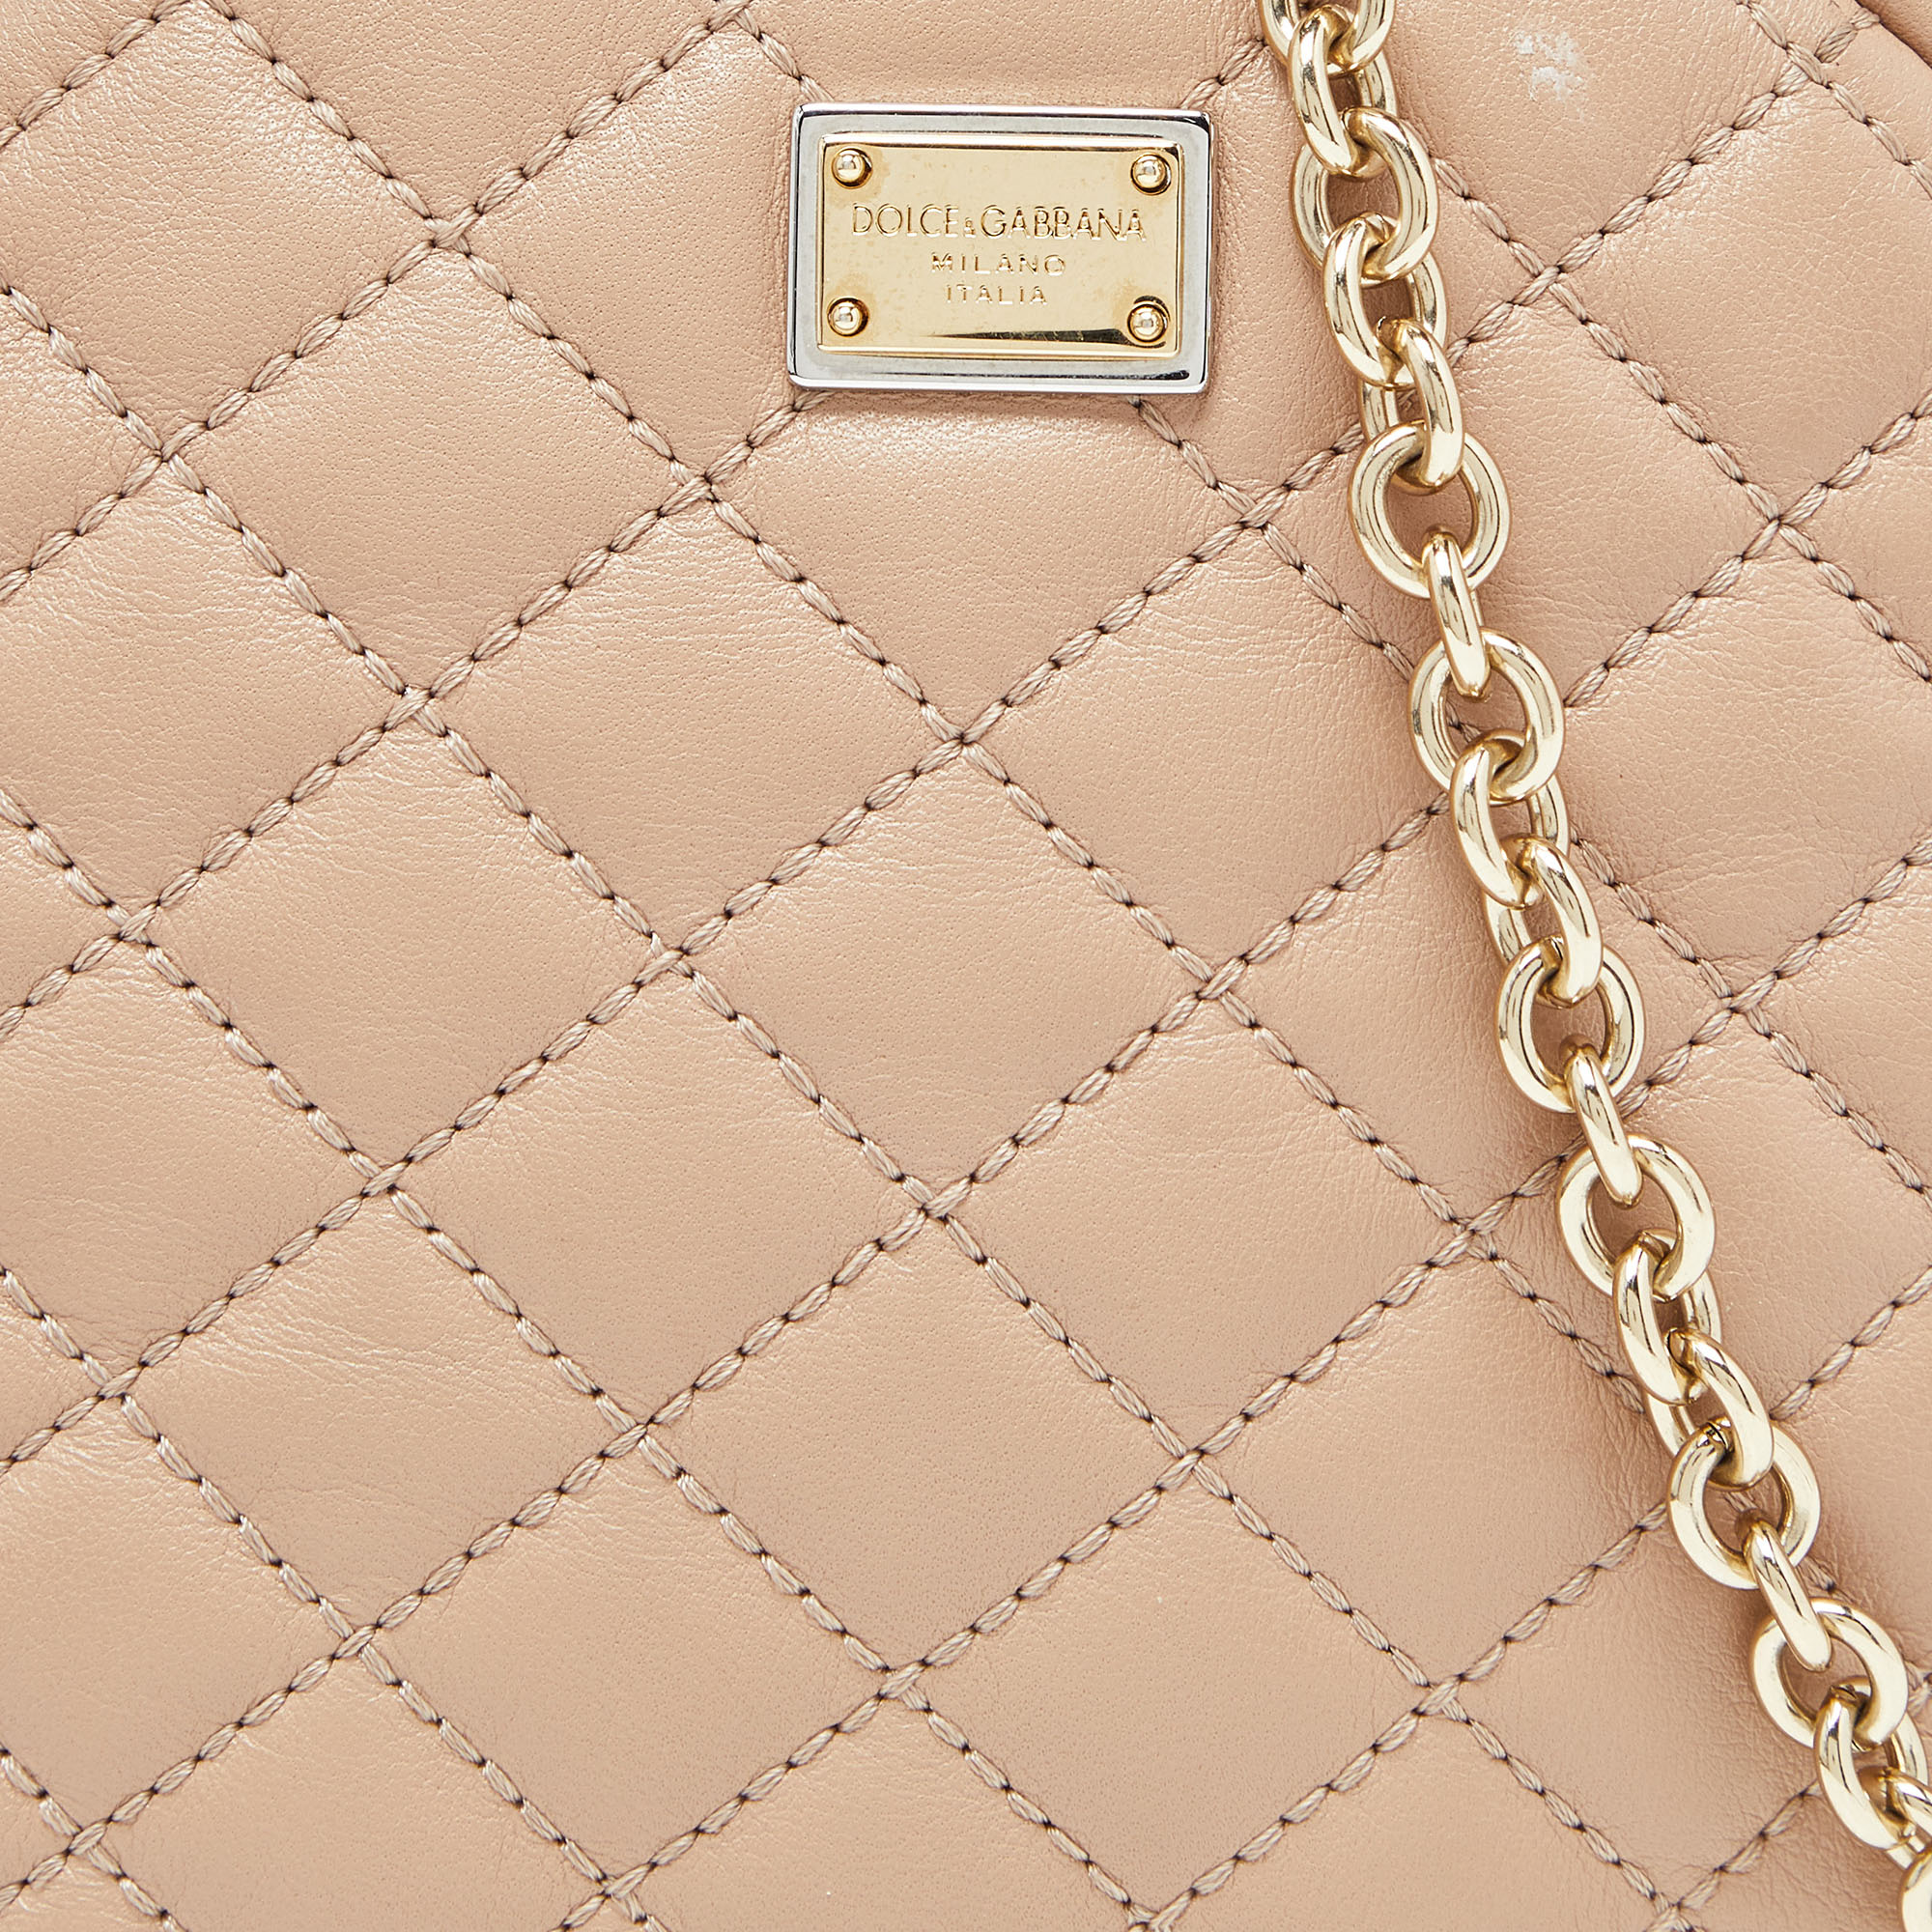 Dolce & Gabbana Beige Leather Round Glam Crossbody Bag